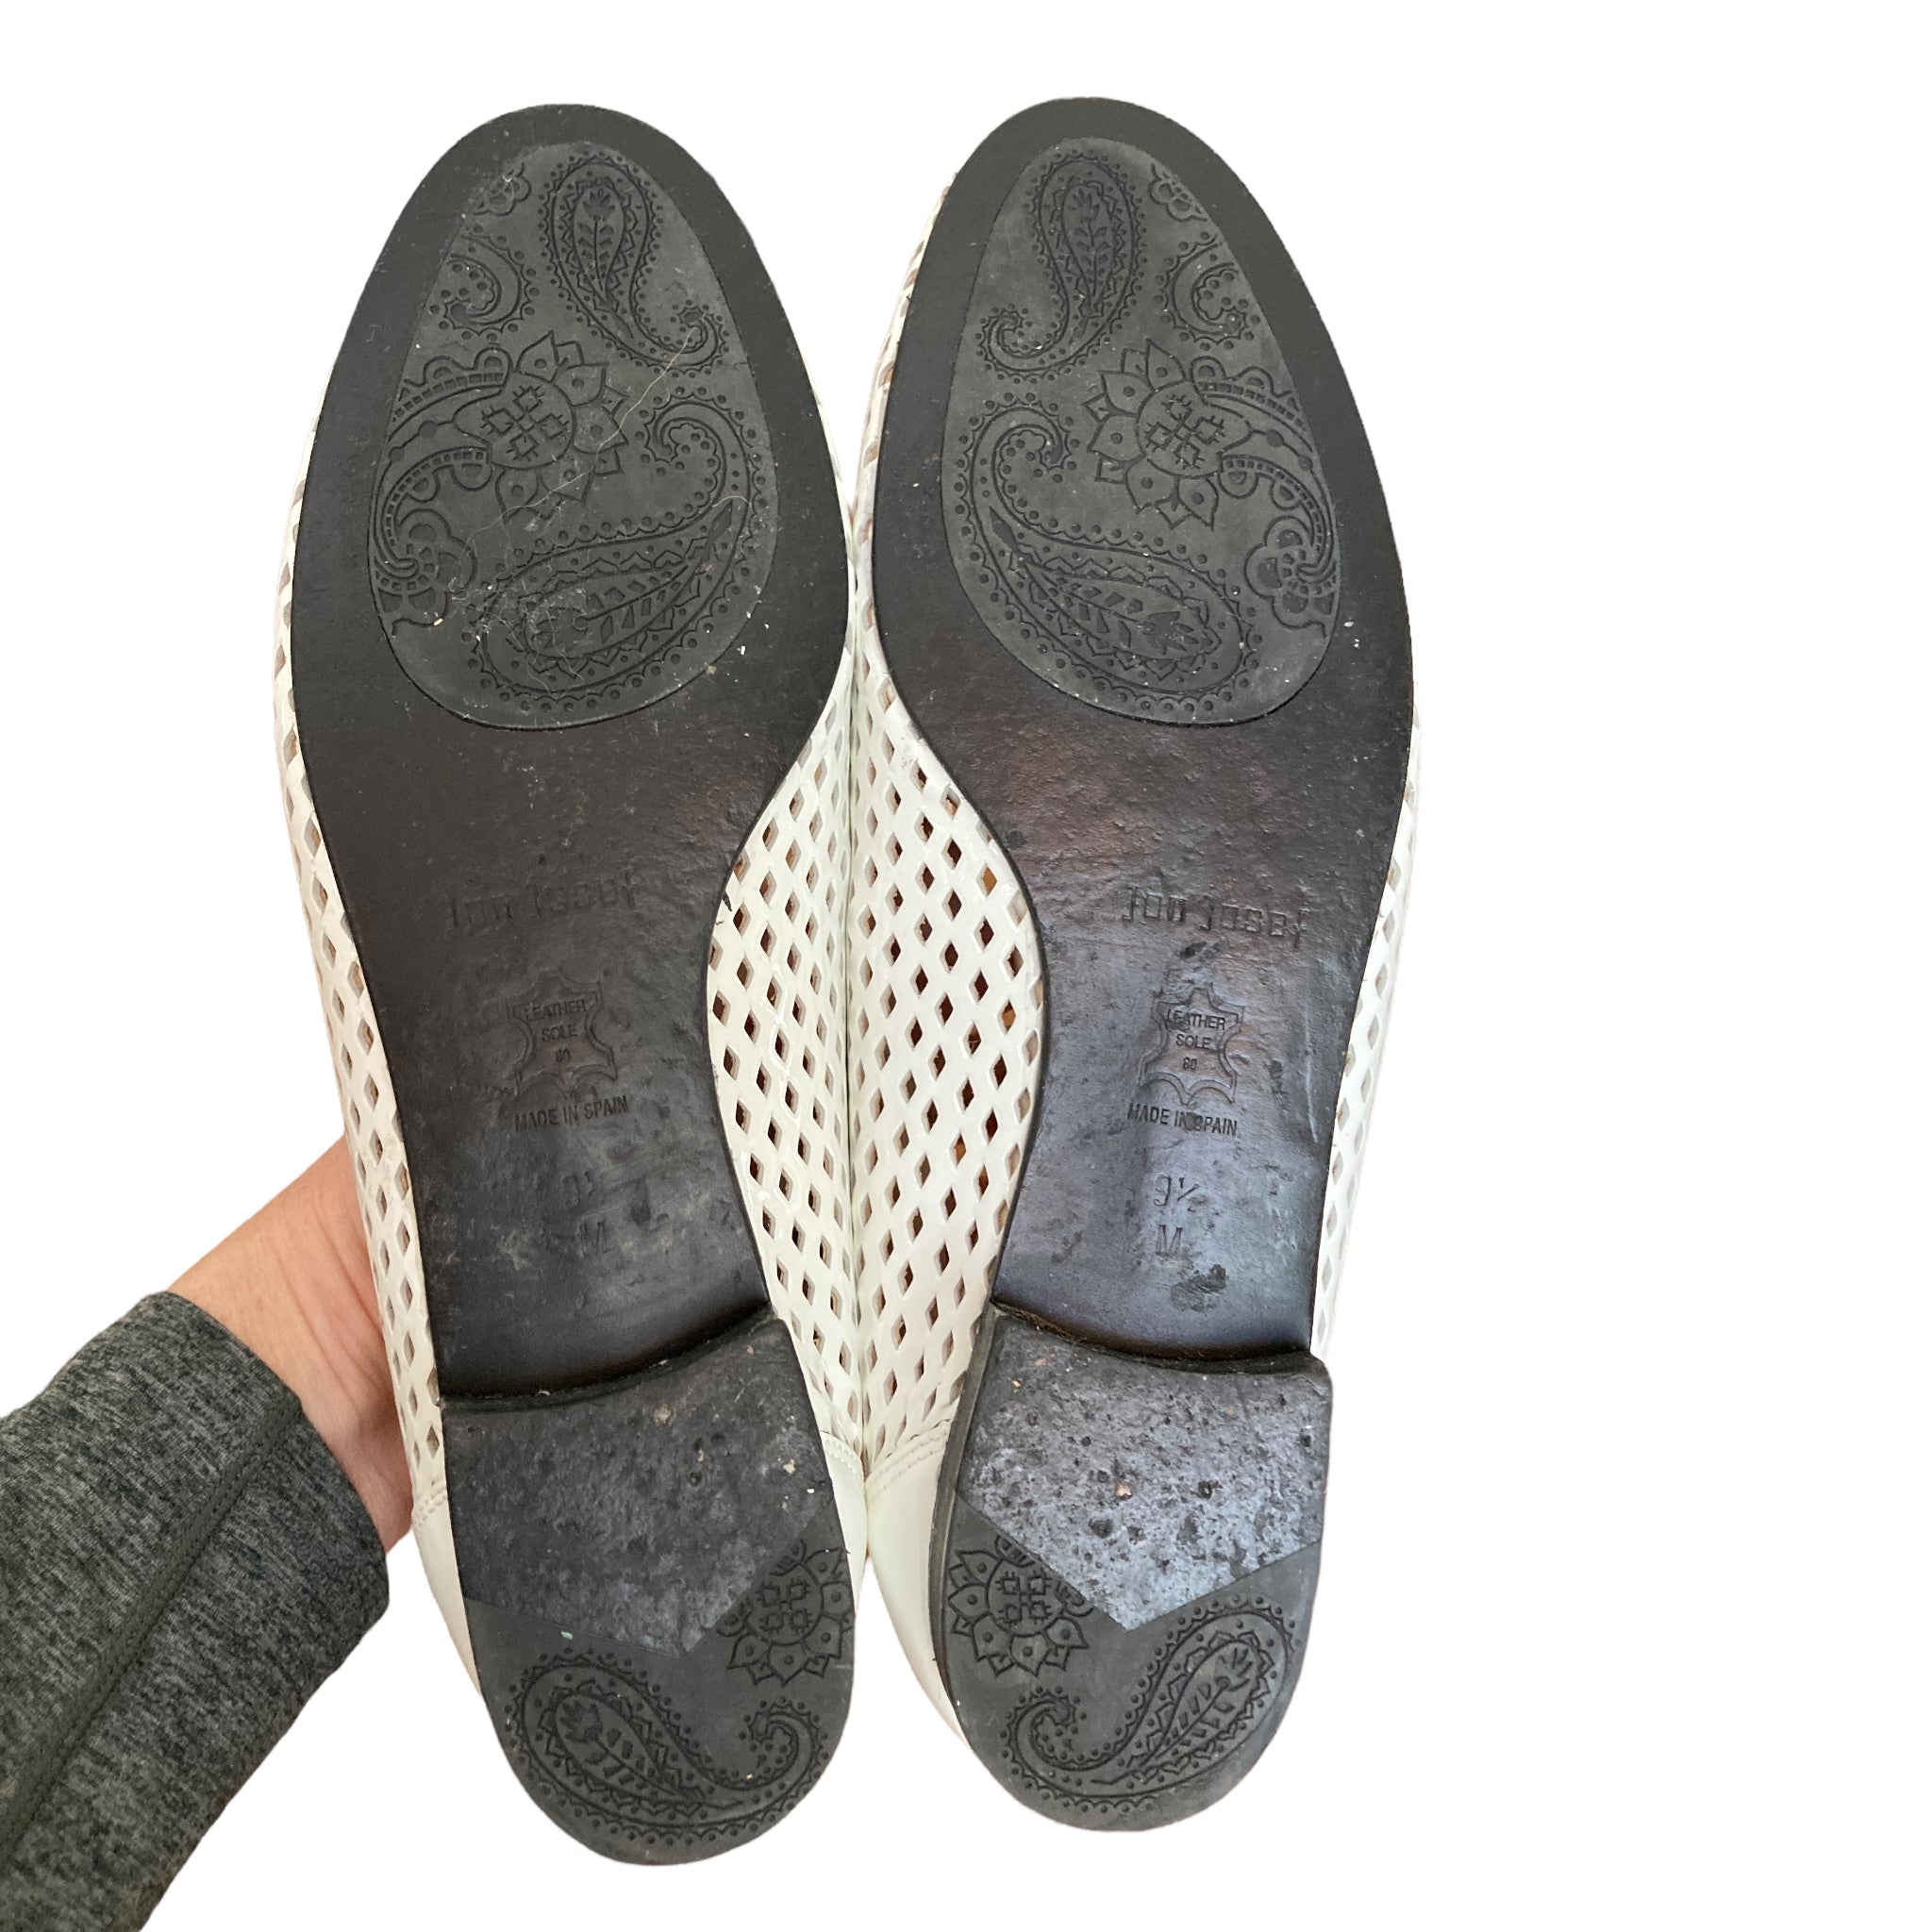 Jon Joseph White Perforated Leather Shoes, 9.5